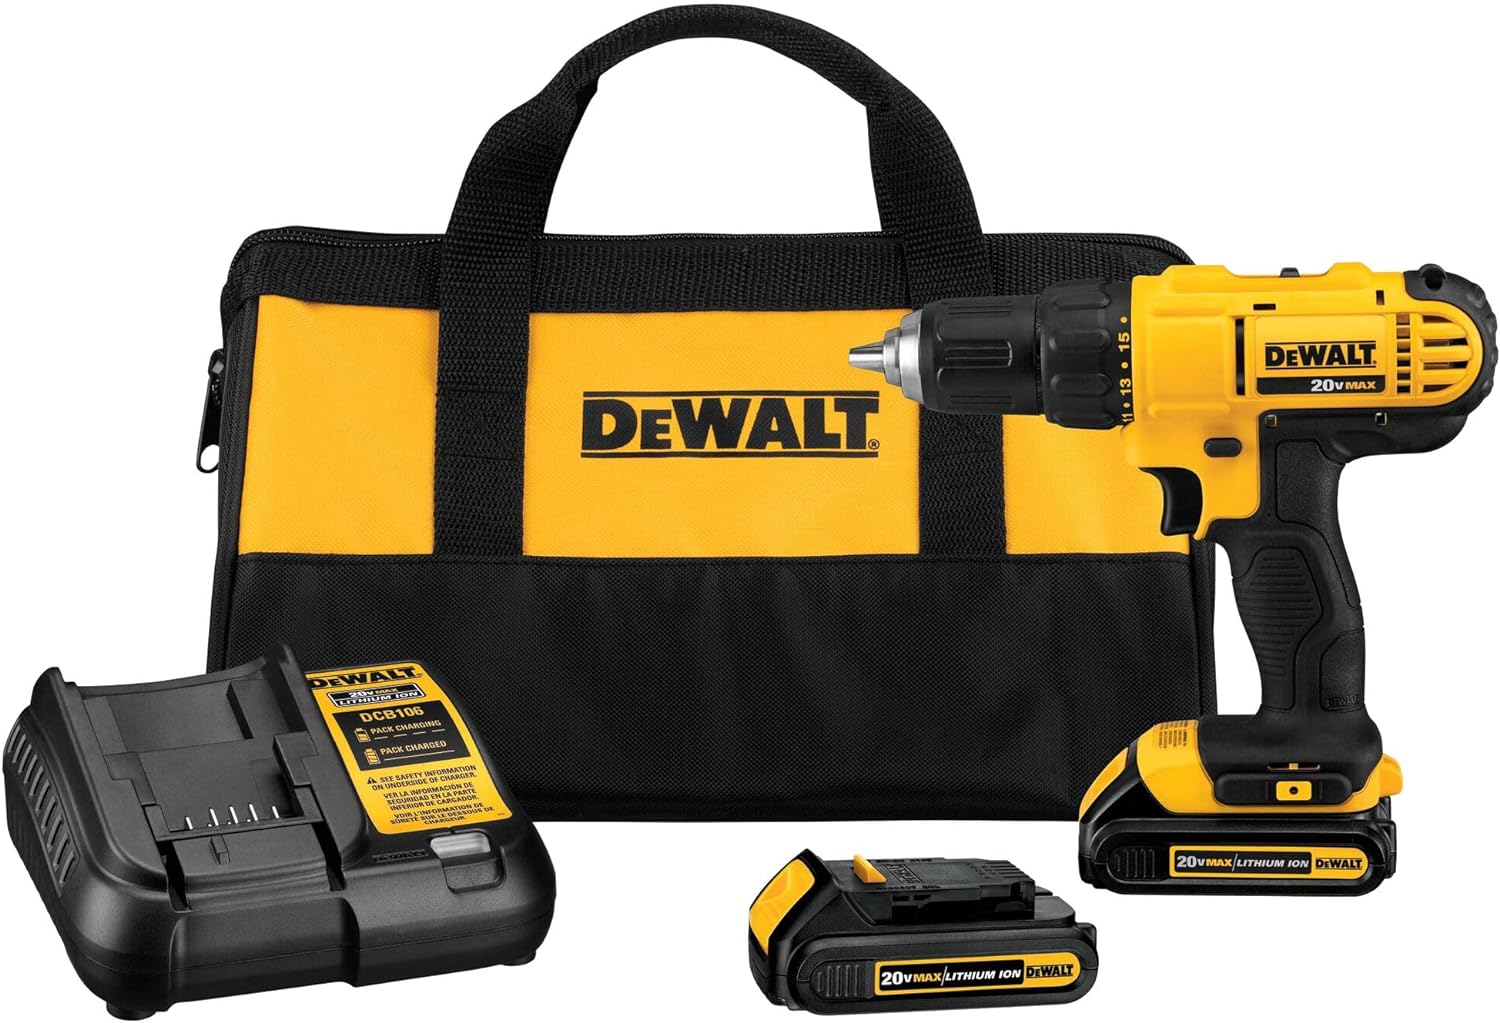 DEWALT 20V Max Cordless Drill/Driver Kit, Compact, 1/2-Inch (DCD771C2), Yellow Compact Drill/Driver